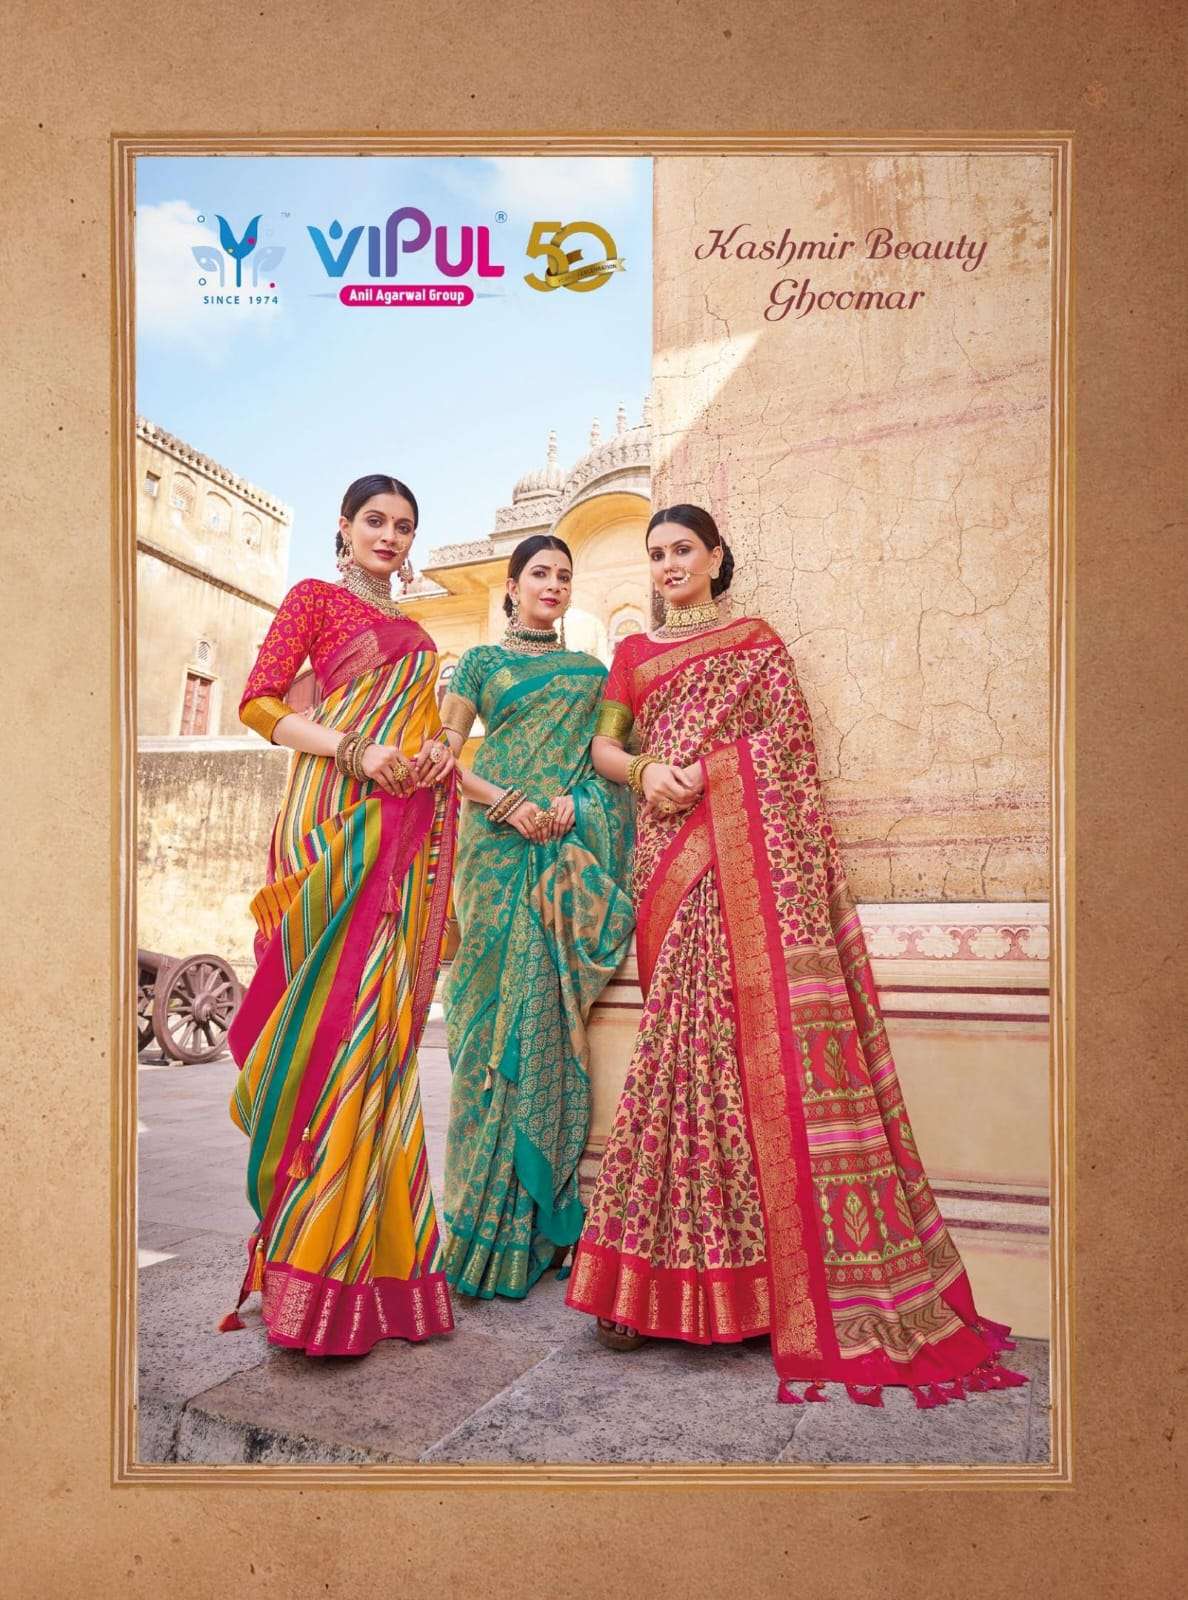 vipul fashion kashmir beauty ghoomar amazing fancy saree wholesaler